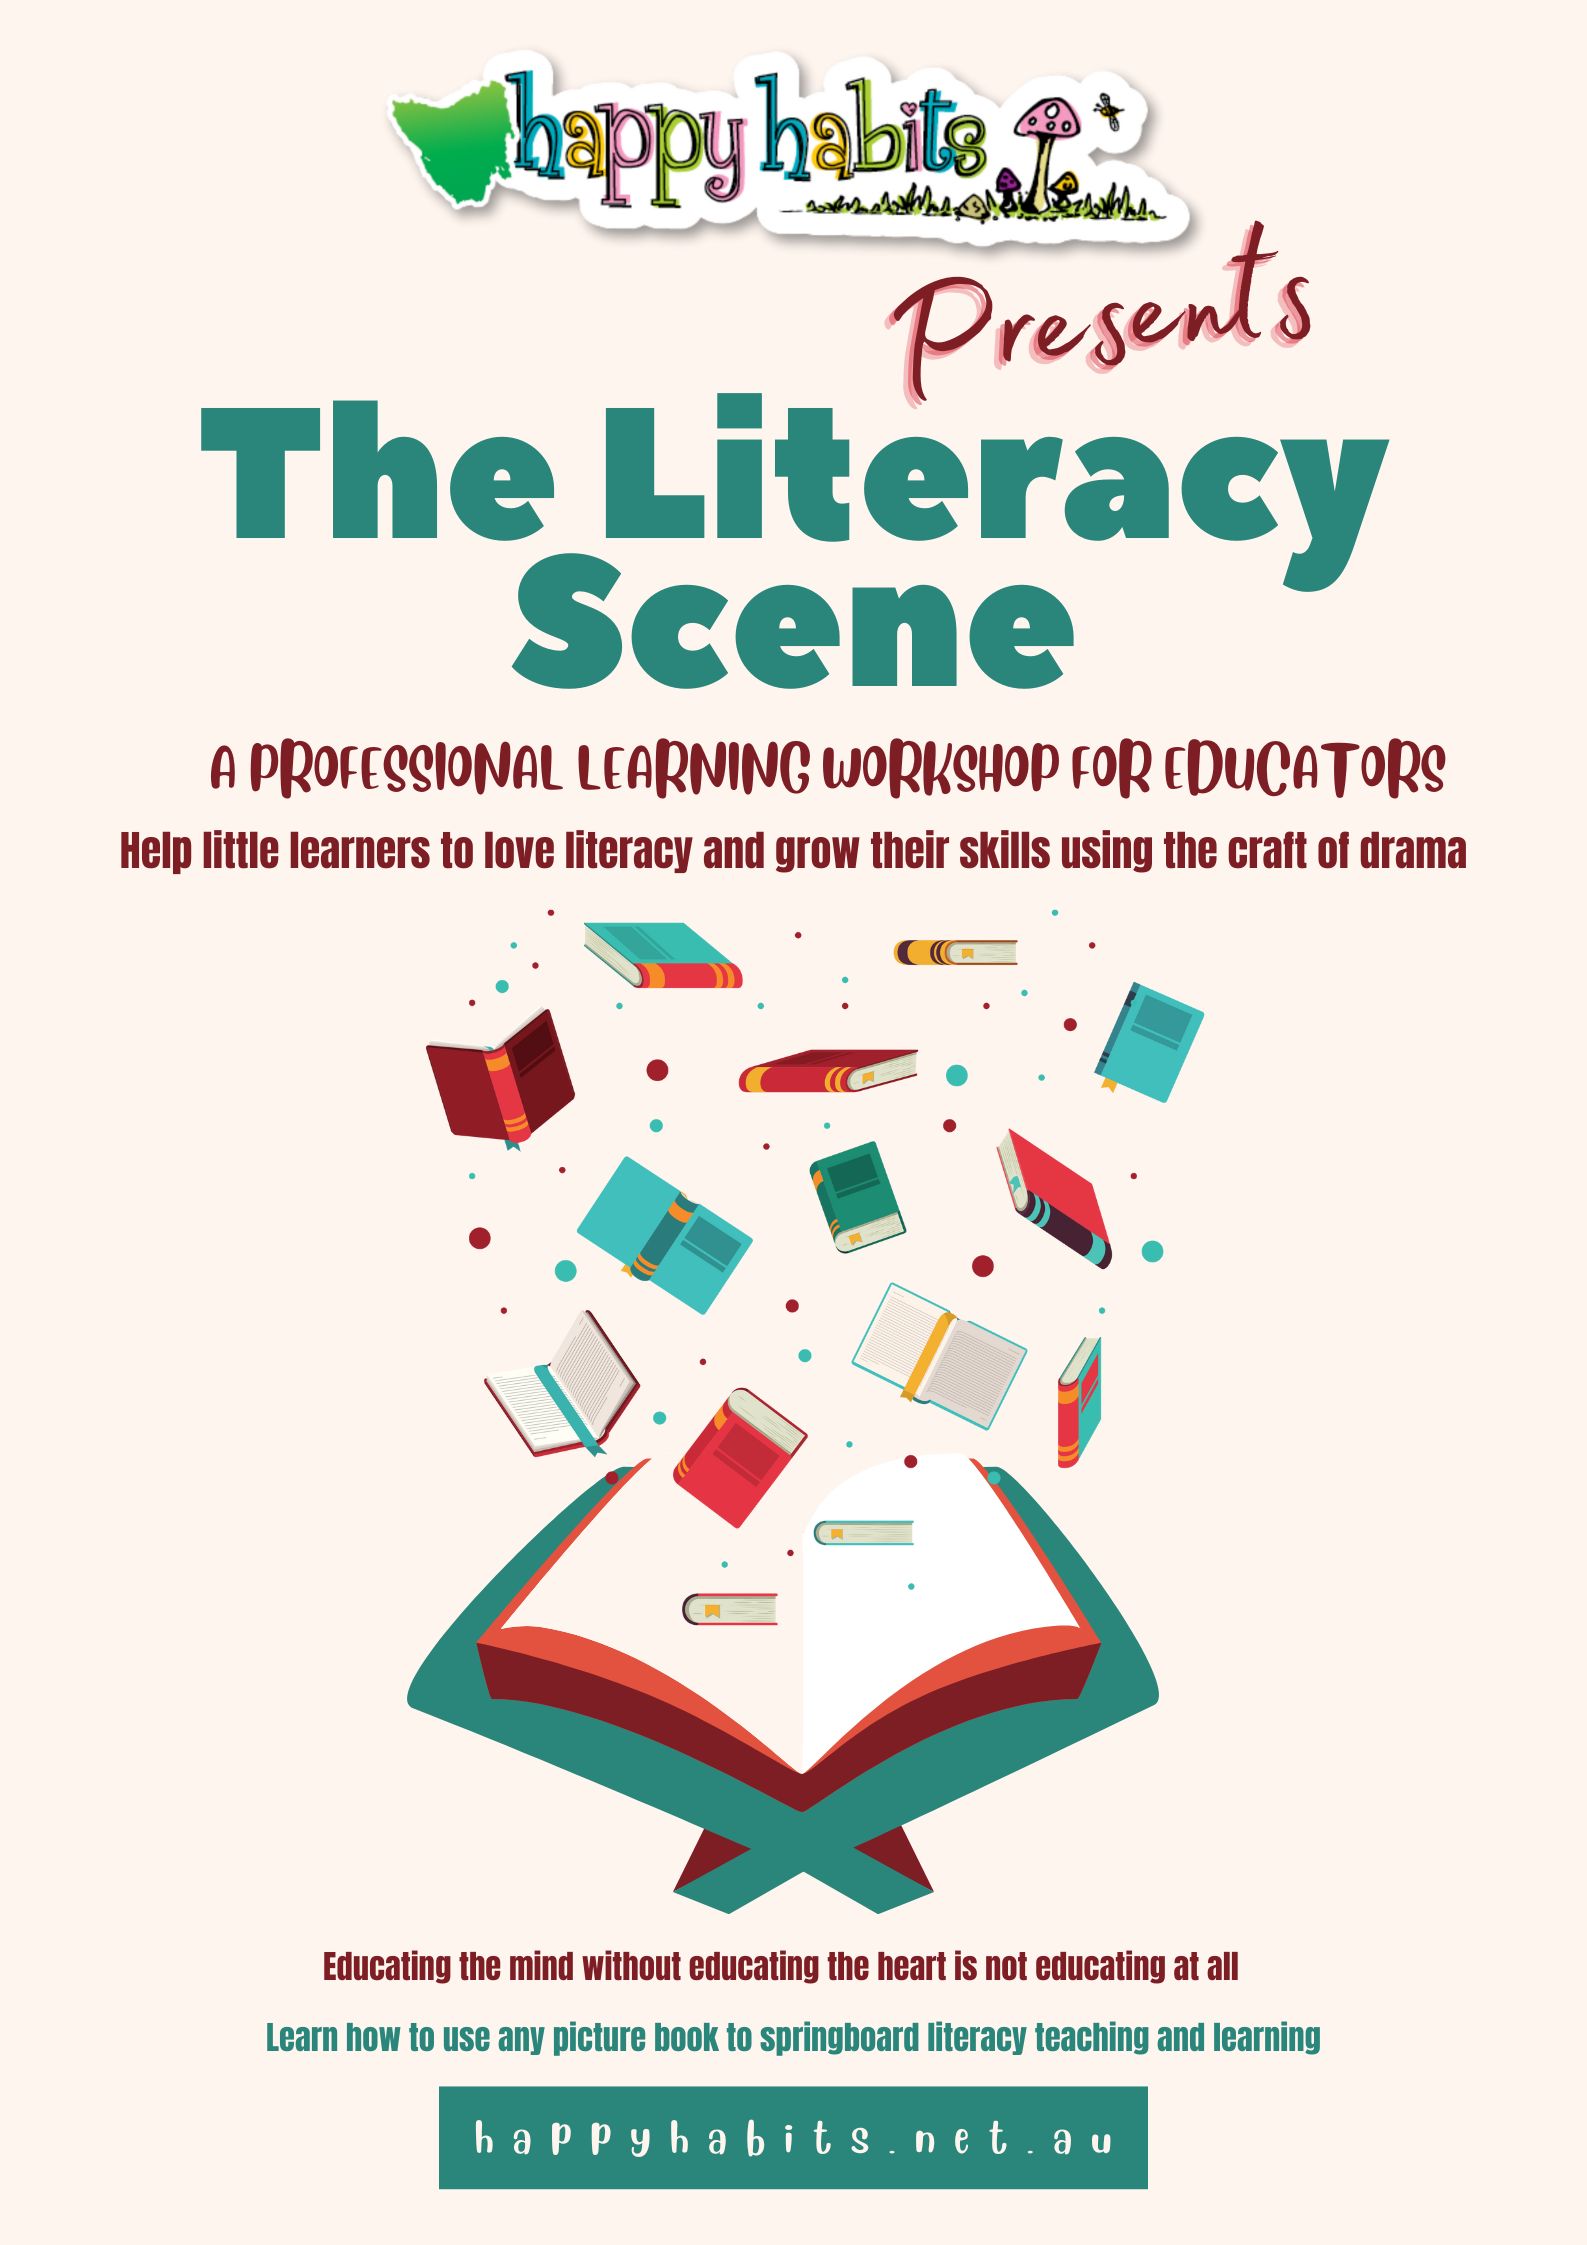 The_Literacy_Scene_Professional_Learning.jpg